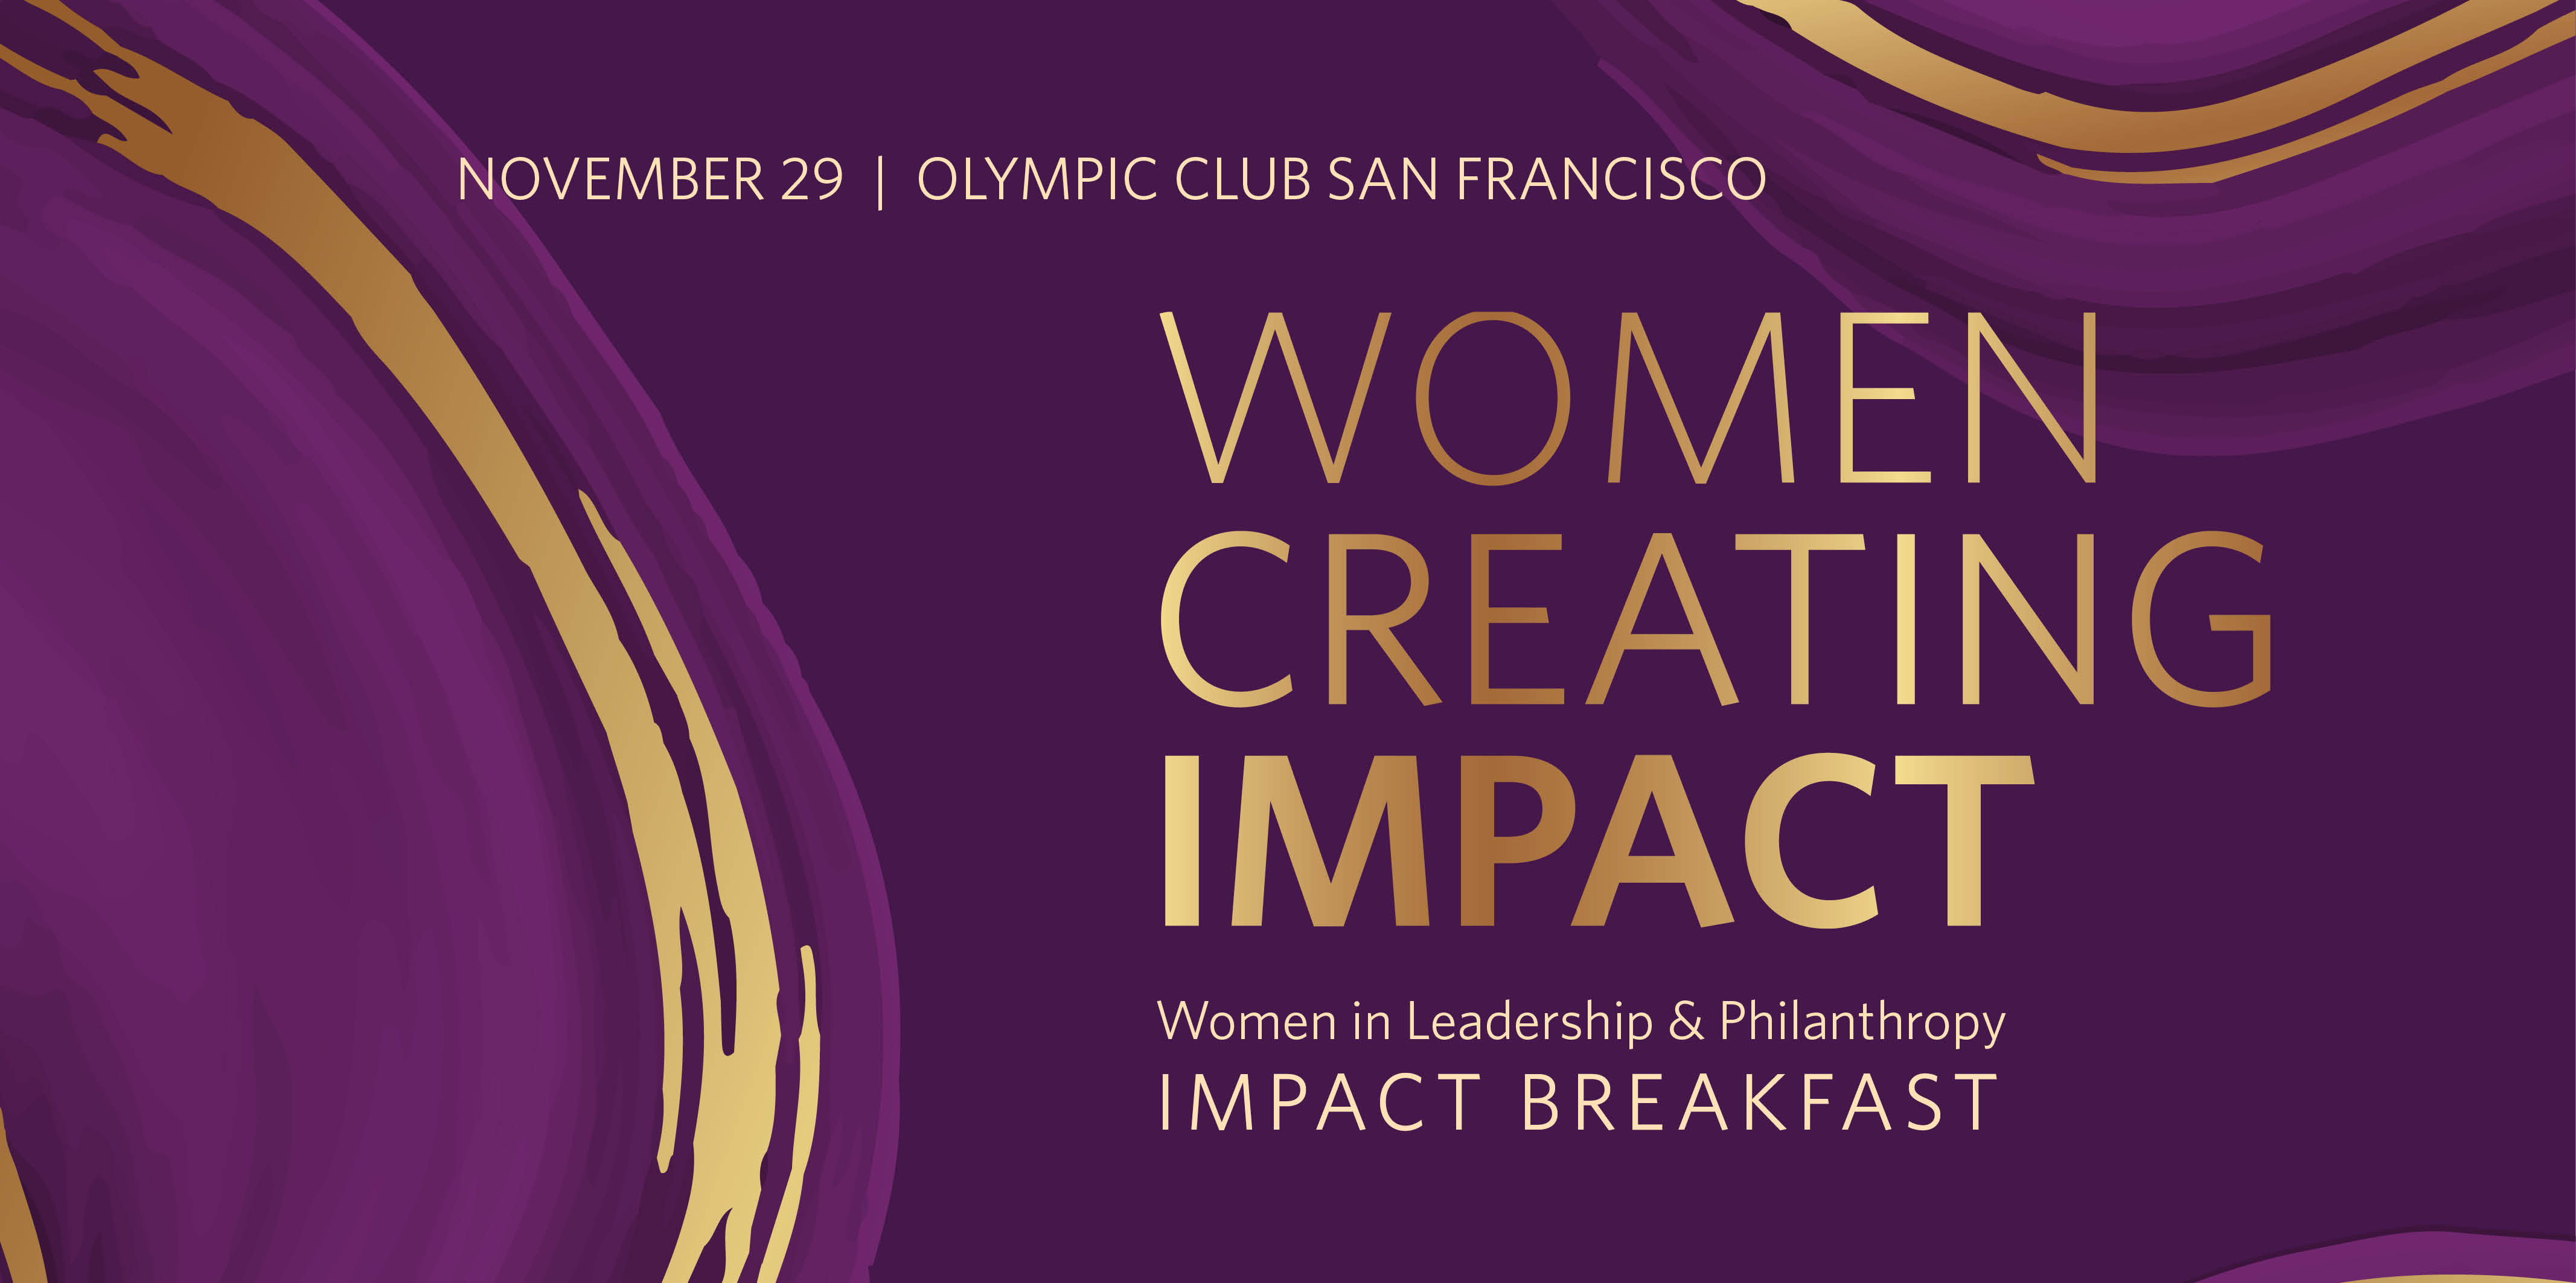 November 29 Olympic Club San Francisco. Women creating impact. Women in leadership and philanthropy impact breakfast.